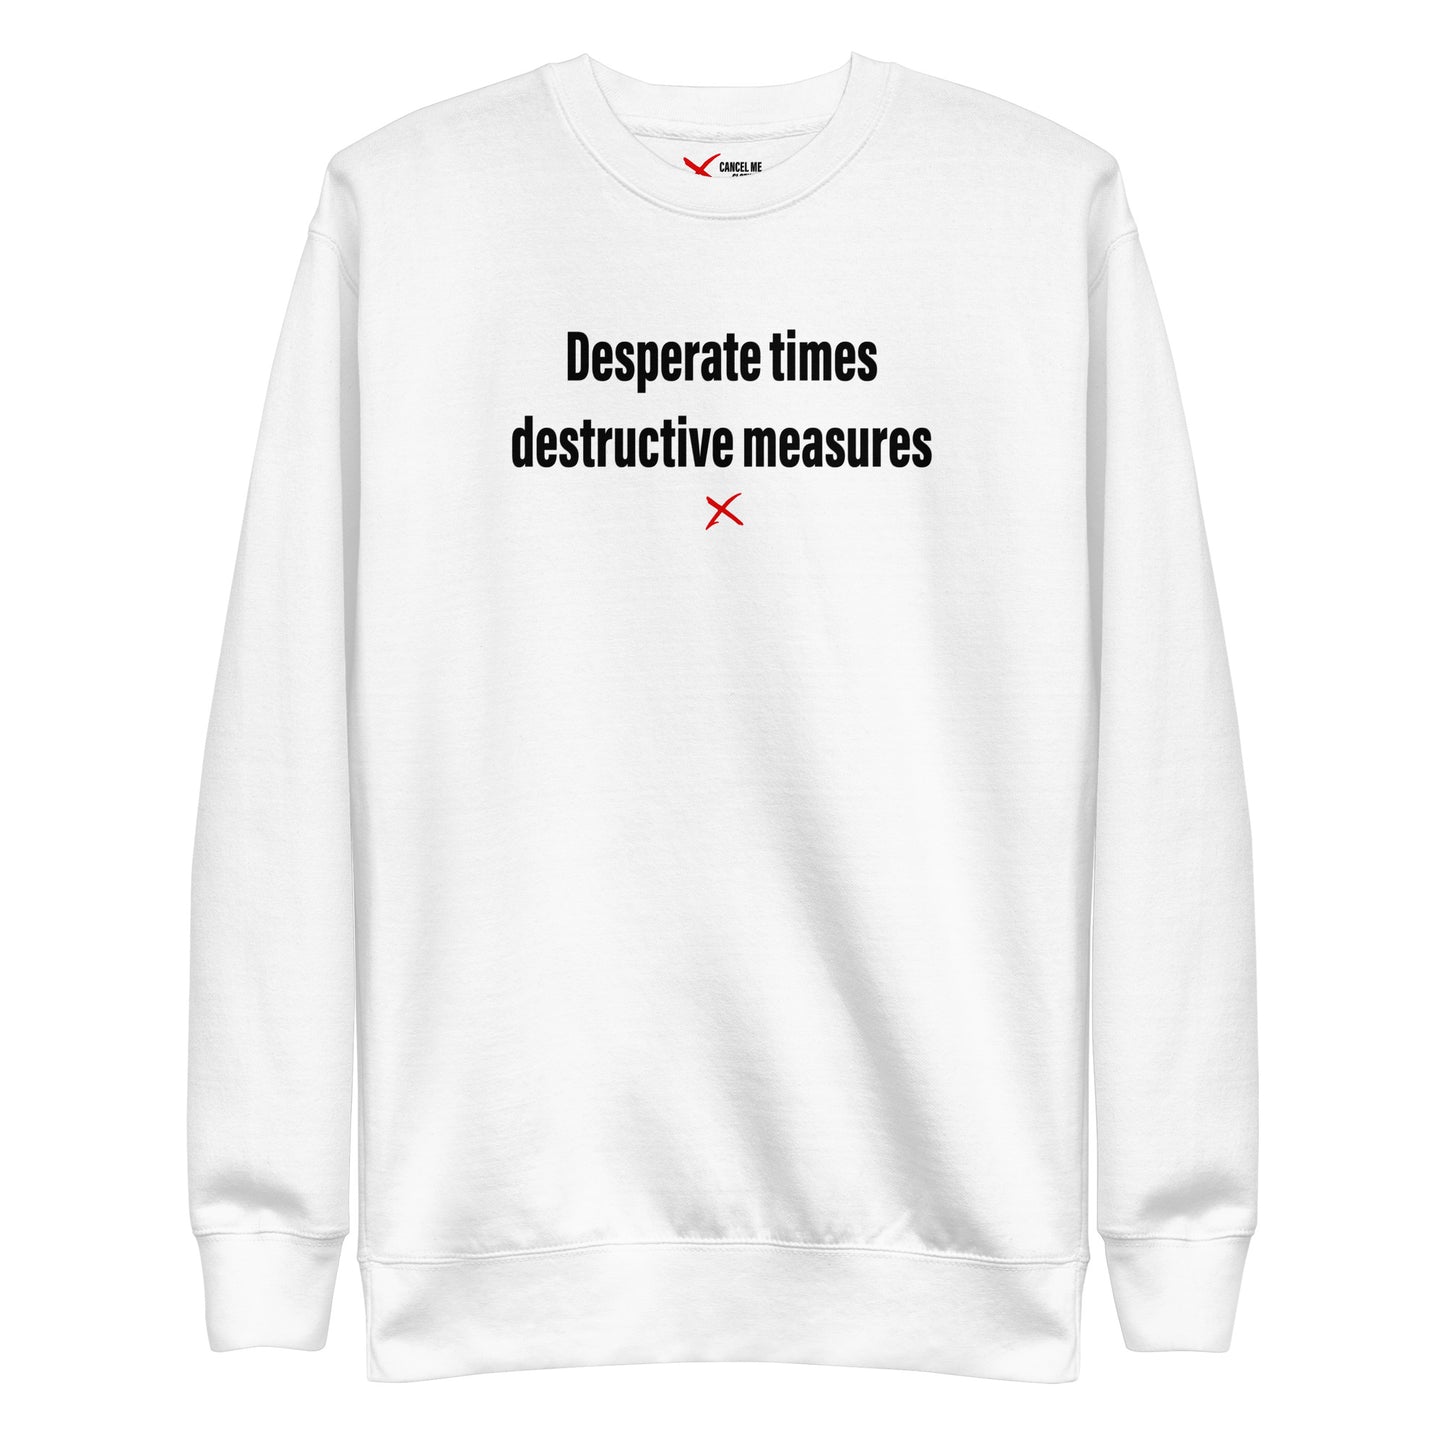 Desperate times destructive measures - Sweatshirt